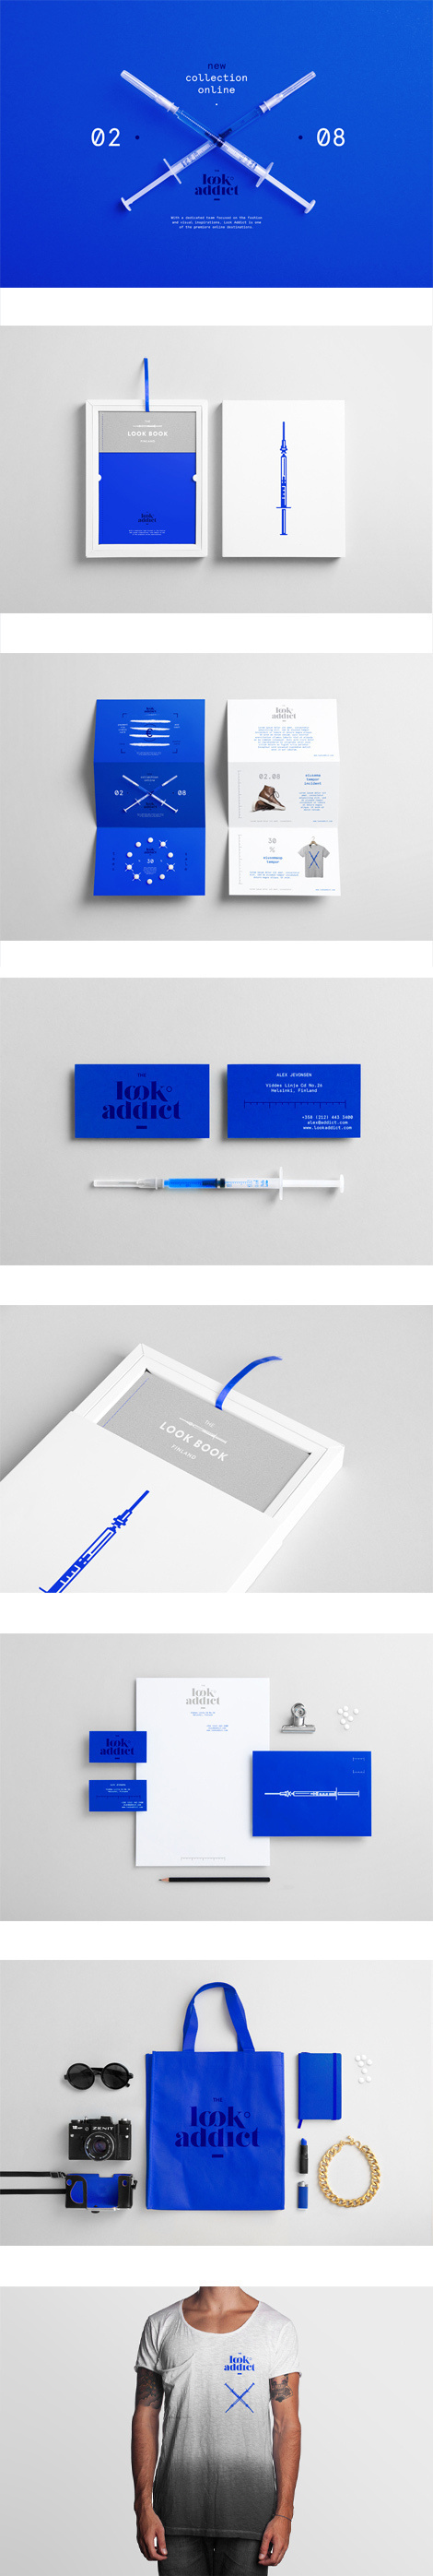 Varia — Look Addict — NOEEKO #branding #print #identity #stationery #blue